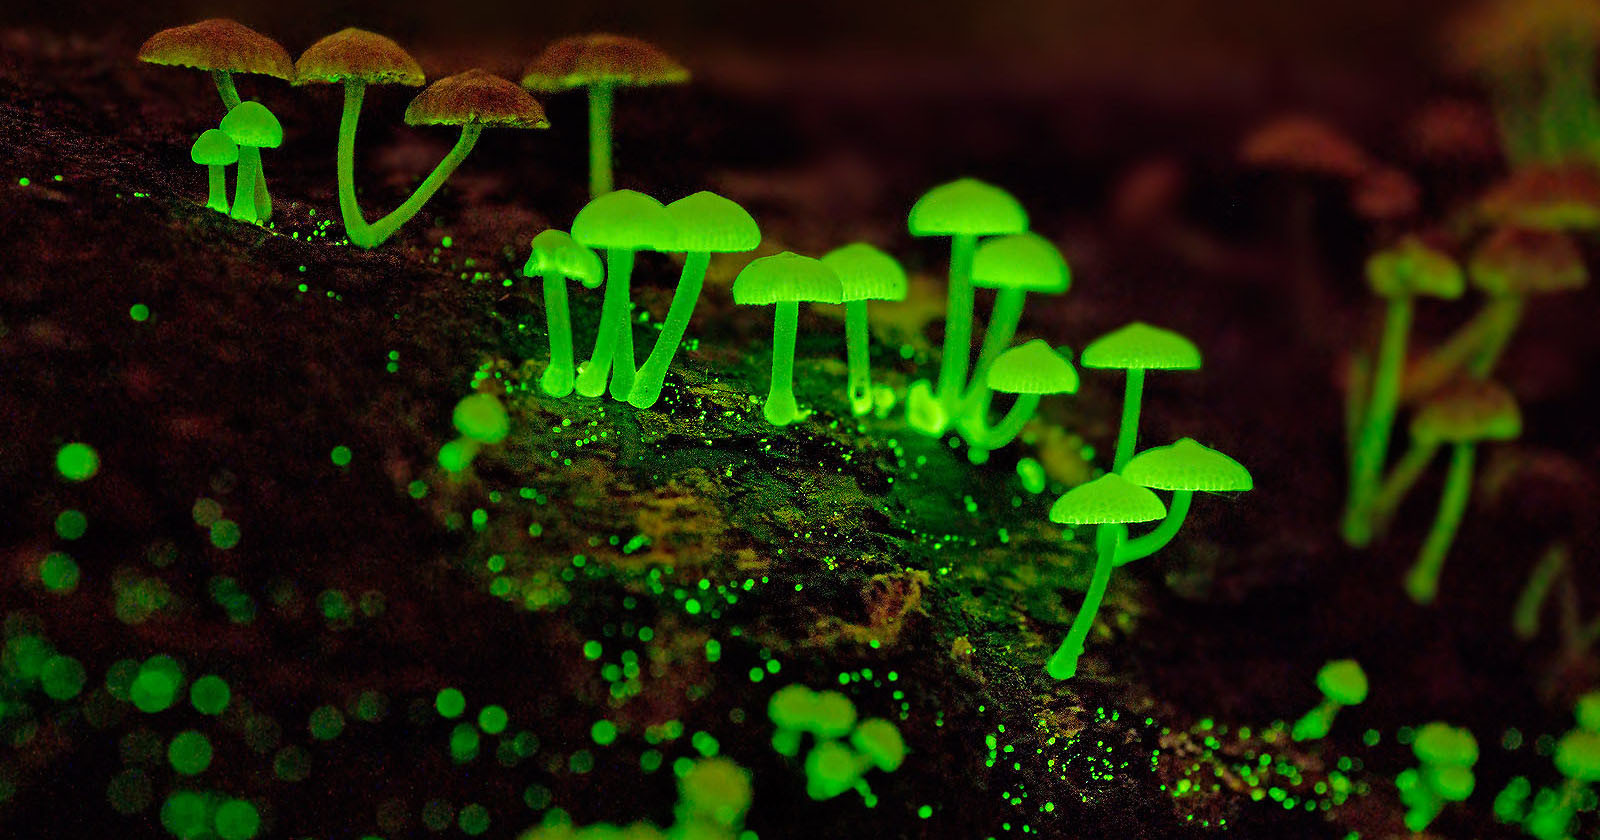  photographing glowing mushrooms singapore 